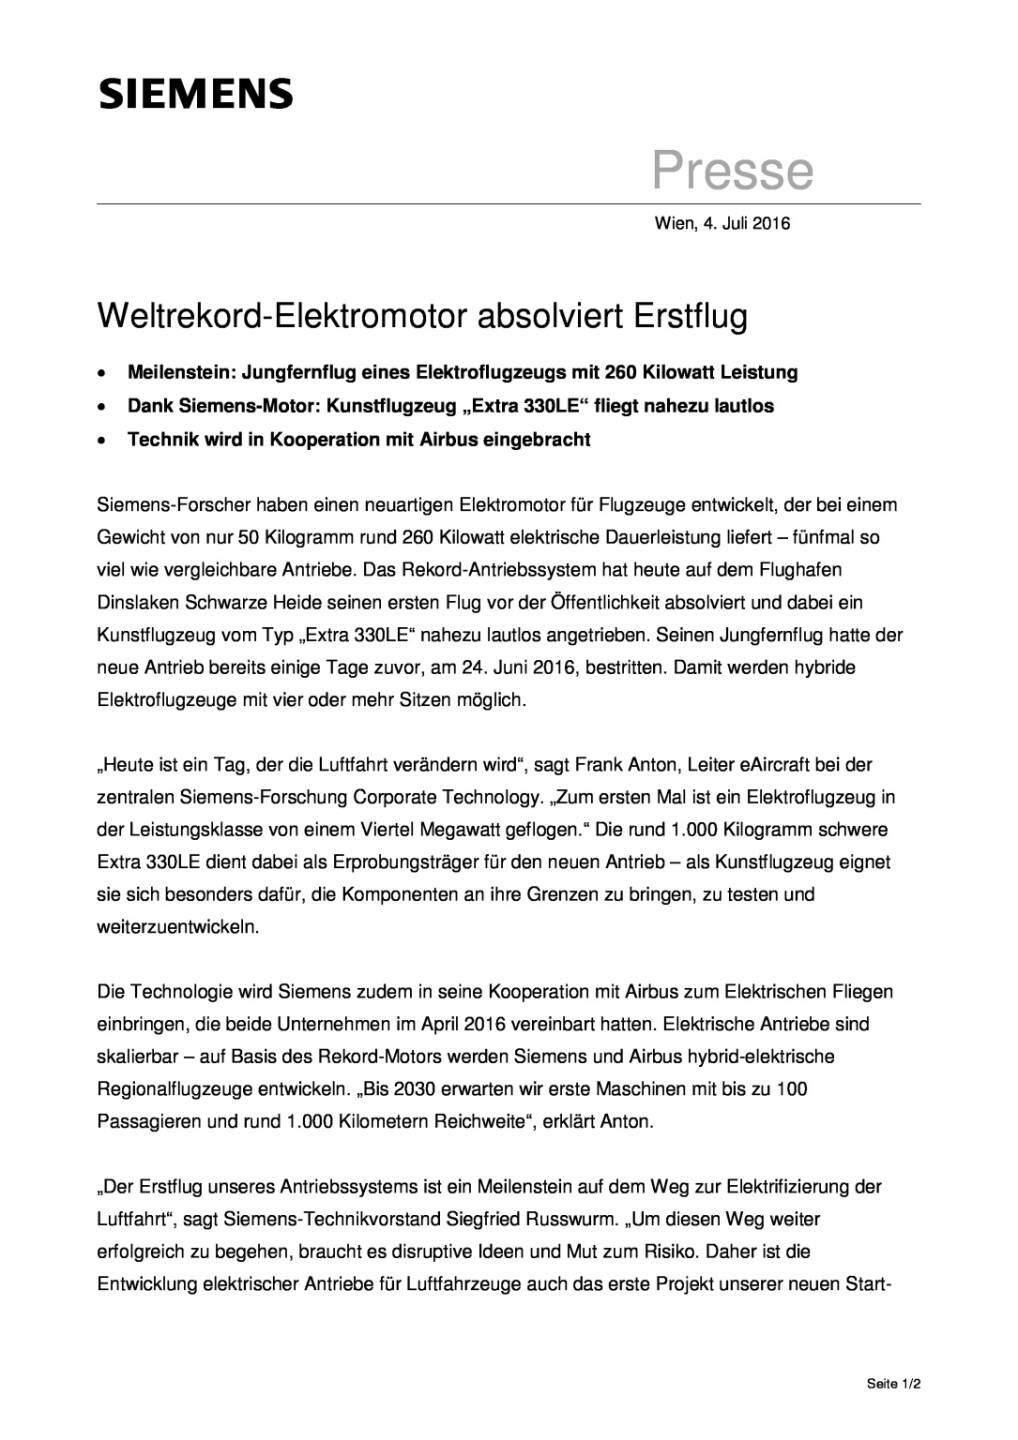 Siemens: Weltrekord-Elektromotor absolviert Erstflug, Seite 1/2, komplettes Dokument unter http://boerse-social.com/static/uploads/file_1330_siemens_weltrekord-elektromotor_absolviert_erstflug.pdf